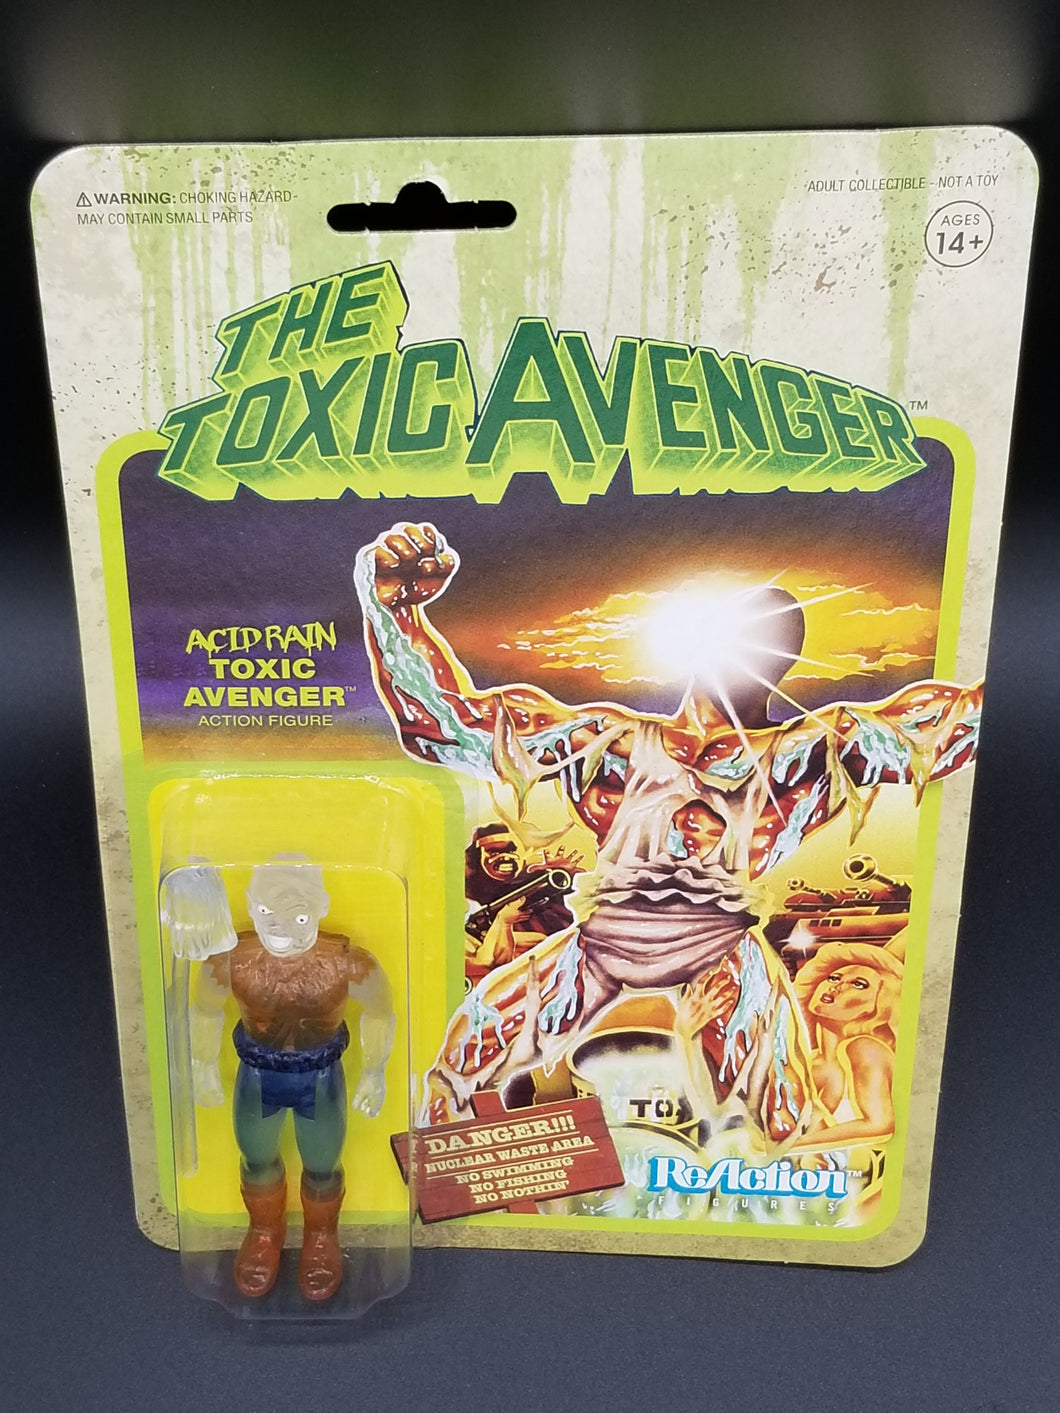 The Toxic Avenger Acid Rain Edition Action Figure